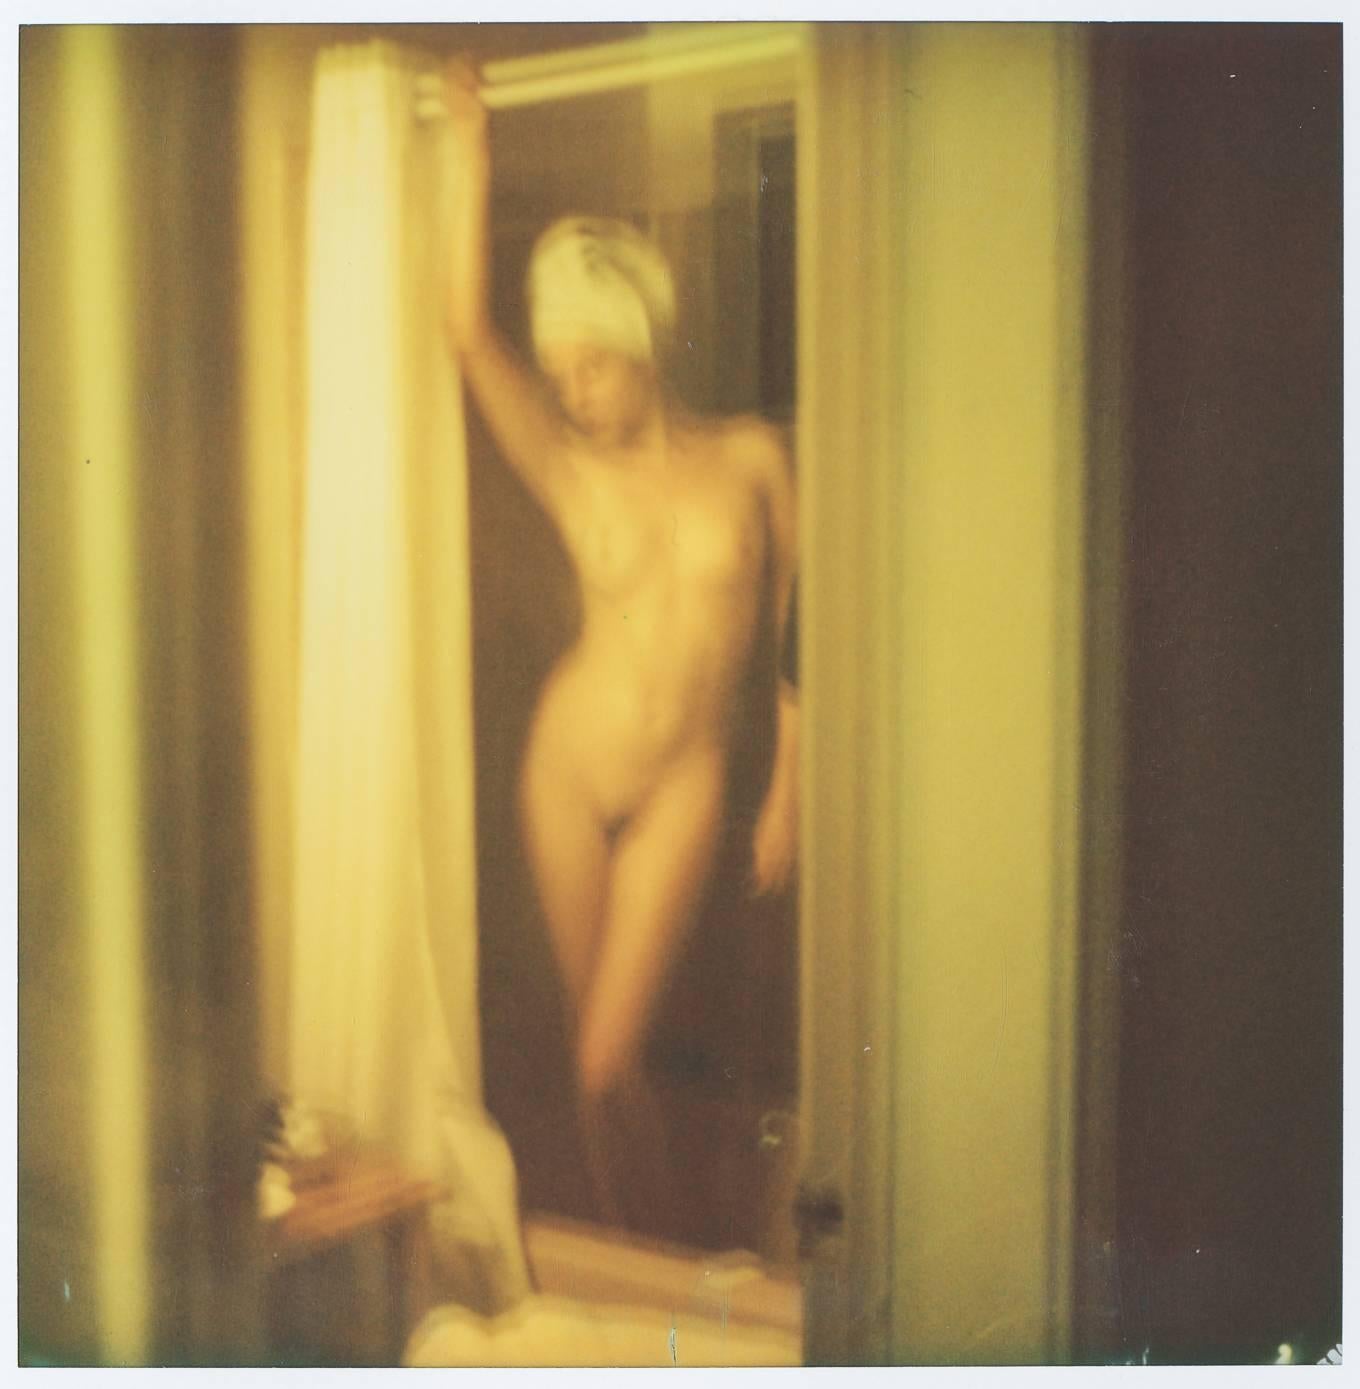 Kirsten Thys van den Audenaerde Nude Photograph - Steam / Contemporary, Polaroid, Analog, 21st Century, Photography